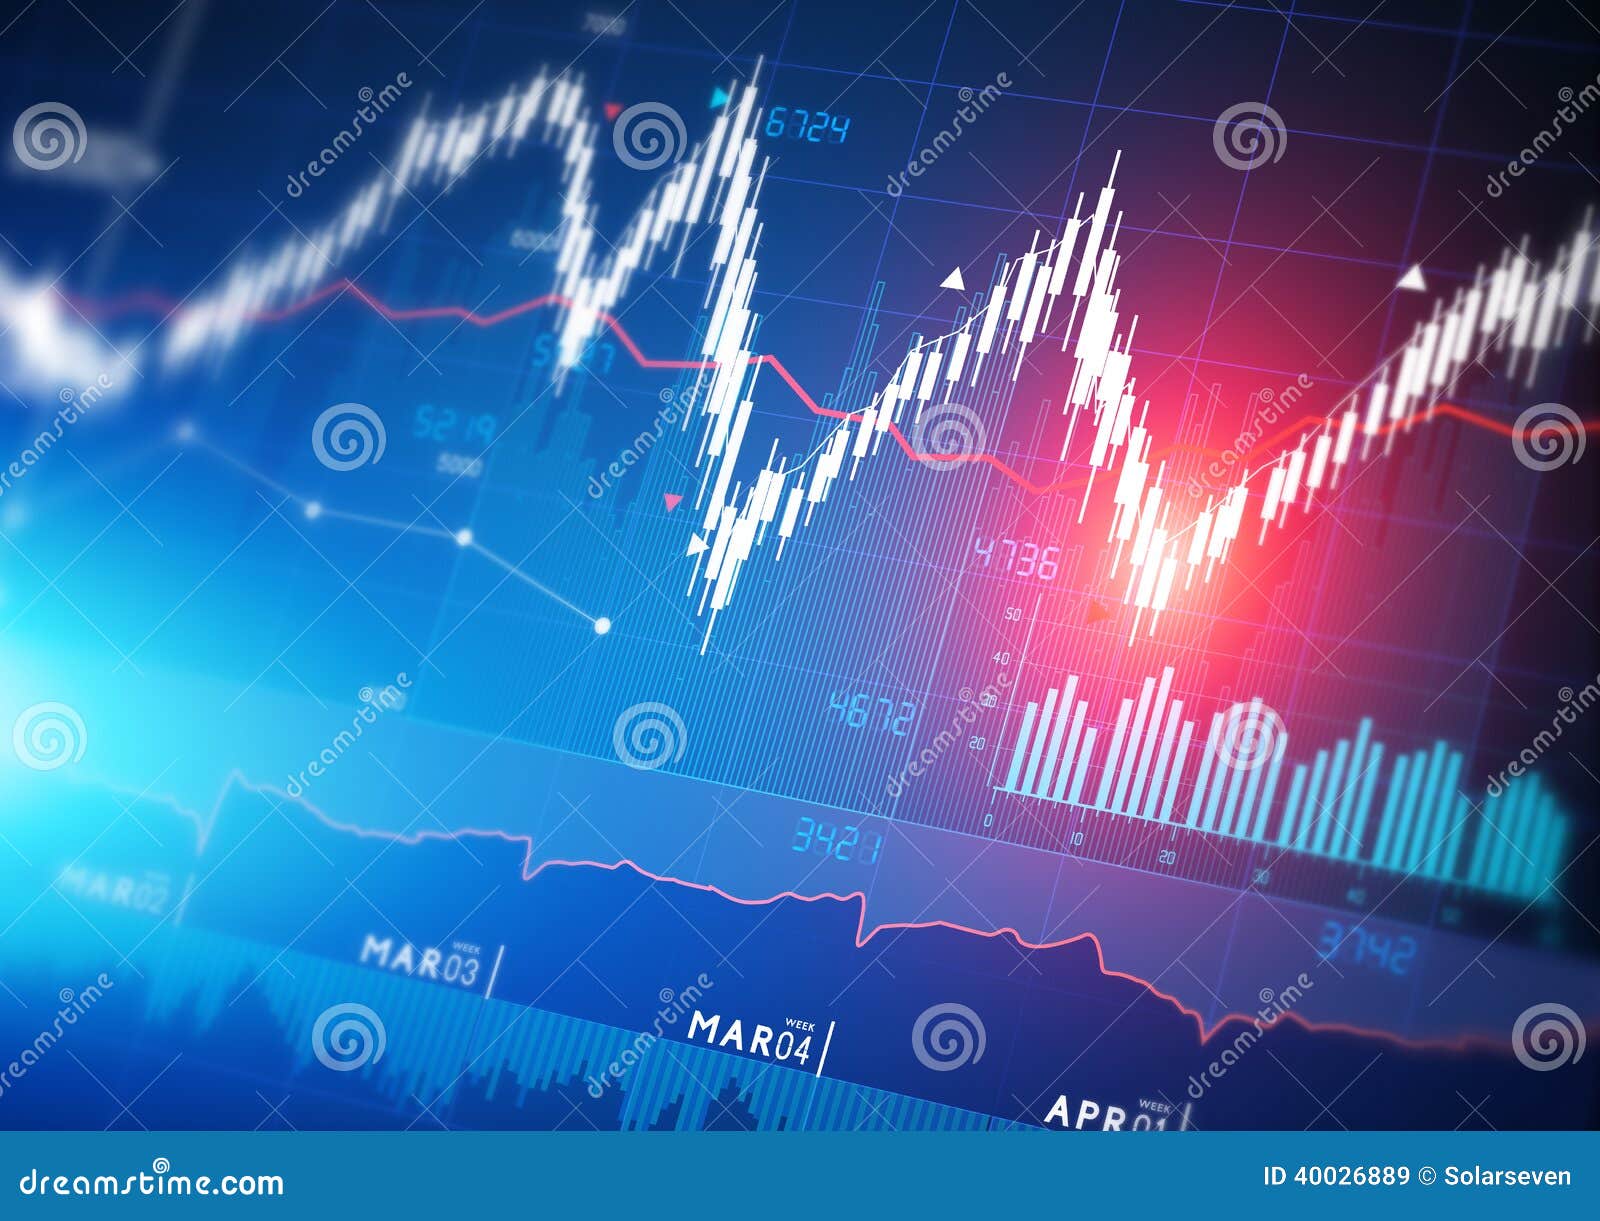 stock market graphs